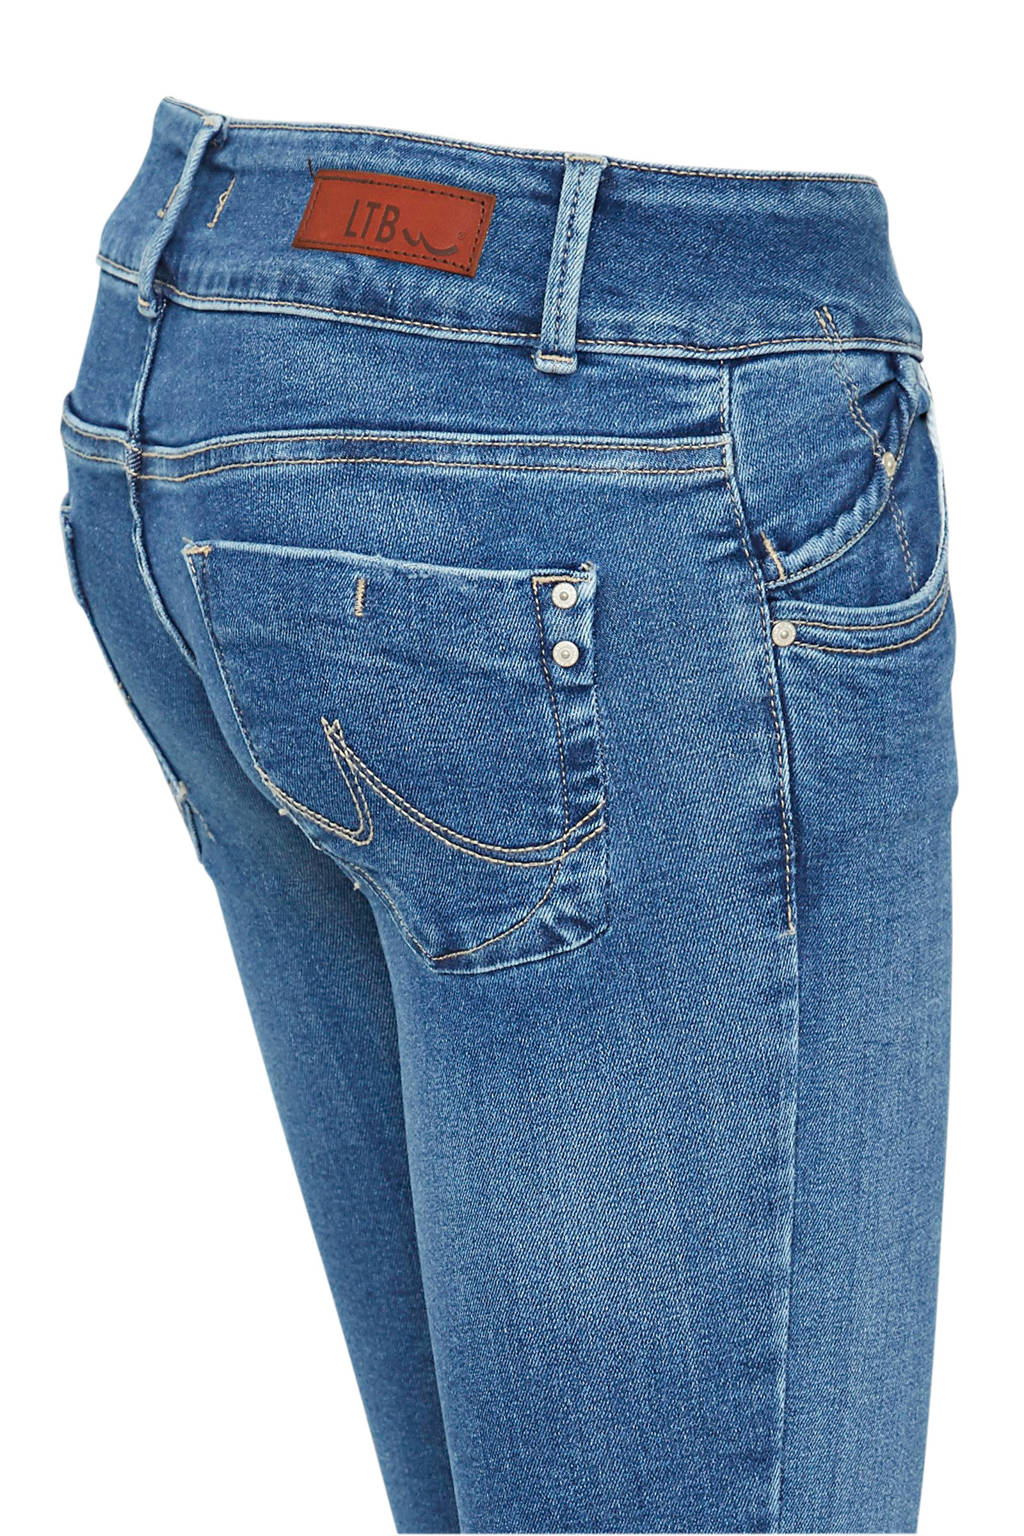 premie Beweging ticket LTB low waist slim fit jeans Molly elenia wash | wehkamp